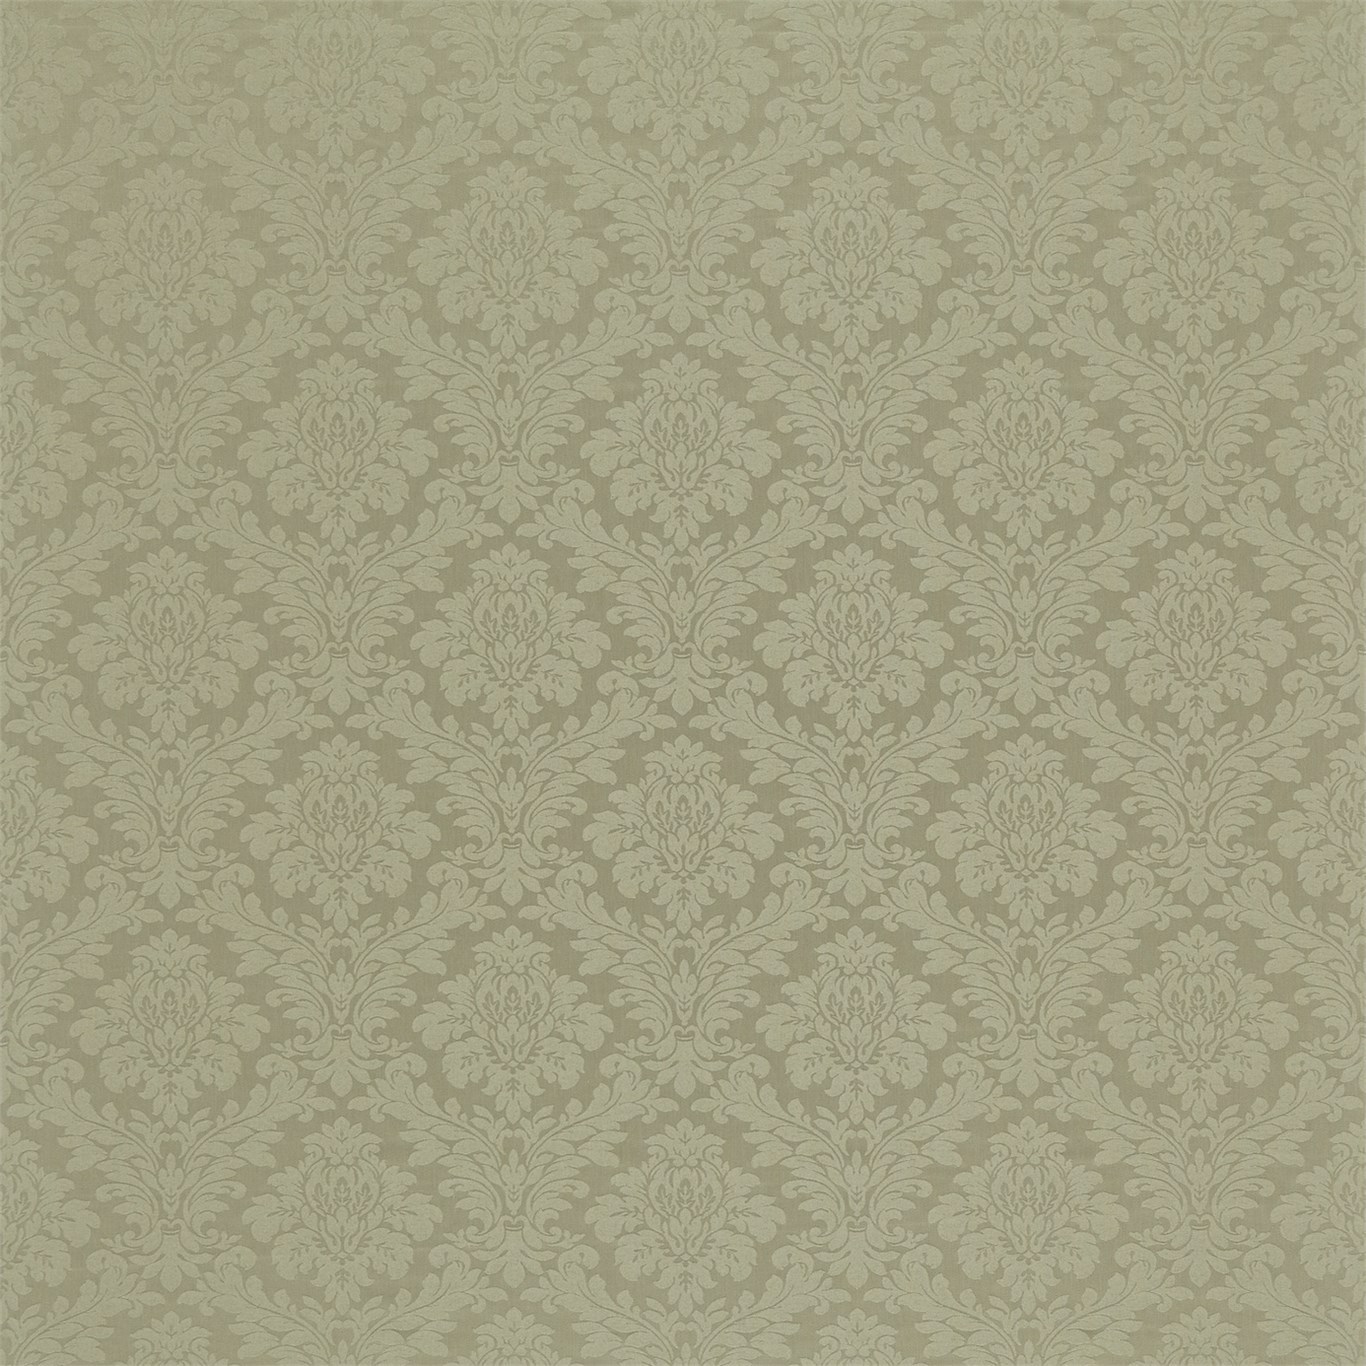 Lymington Damask Thyme Fabric by SAN